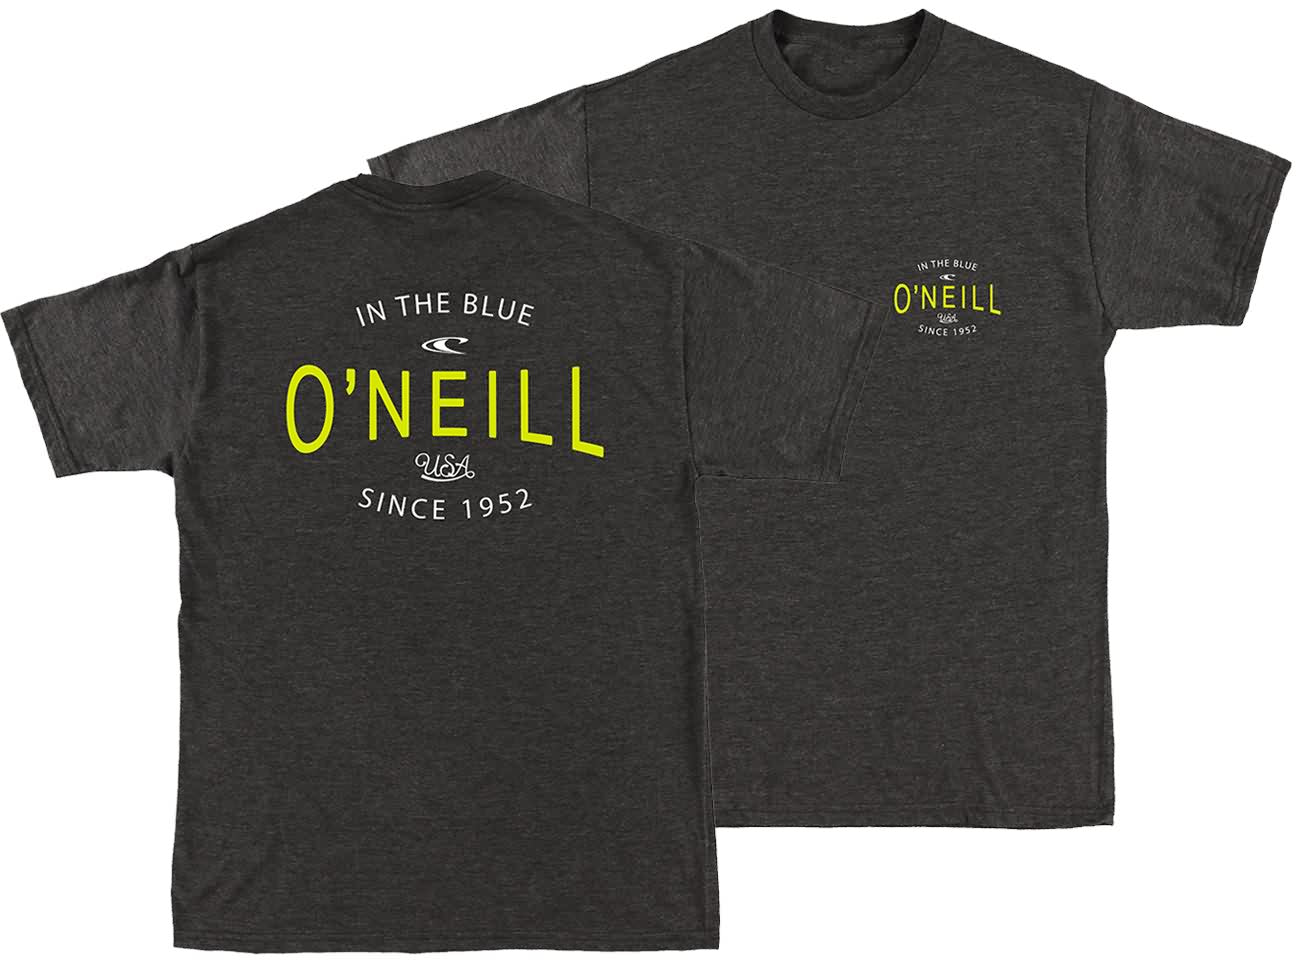 O'Neill Surf Summer 2017 Mens and Youth Boys Beach Tees Shirts Lookbook